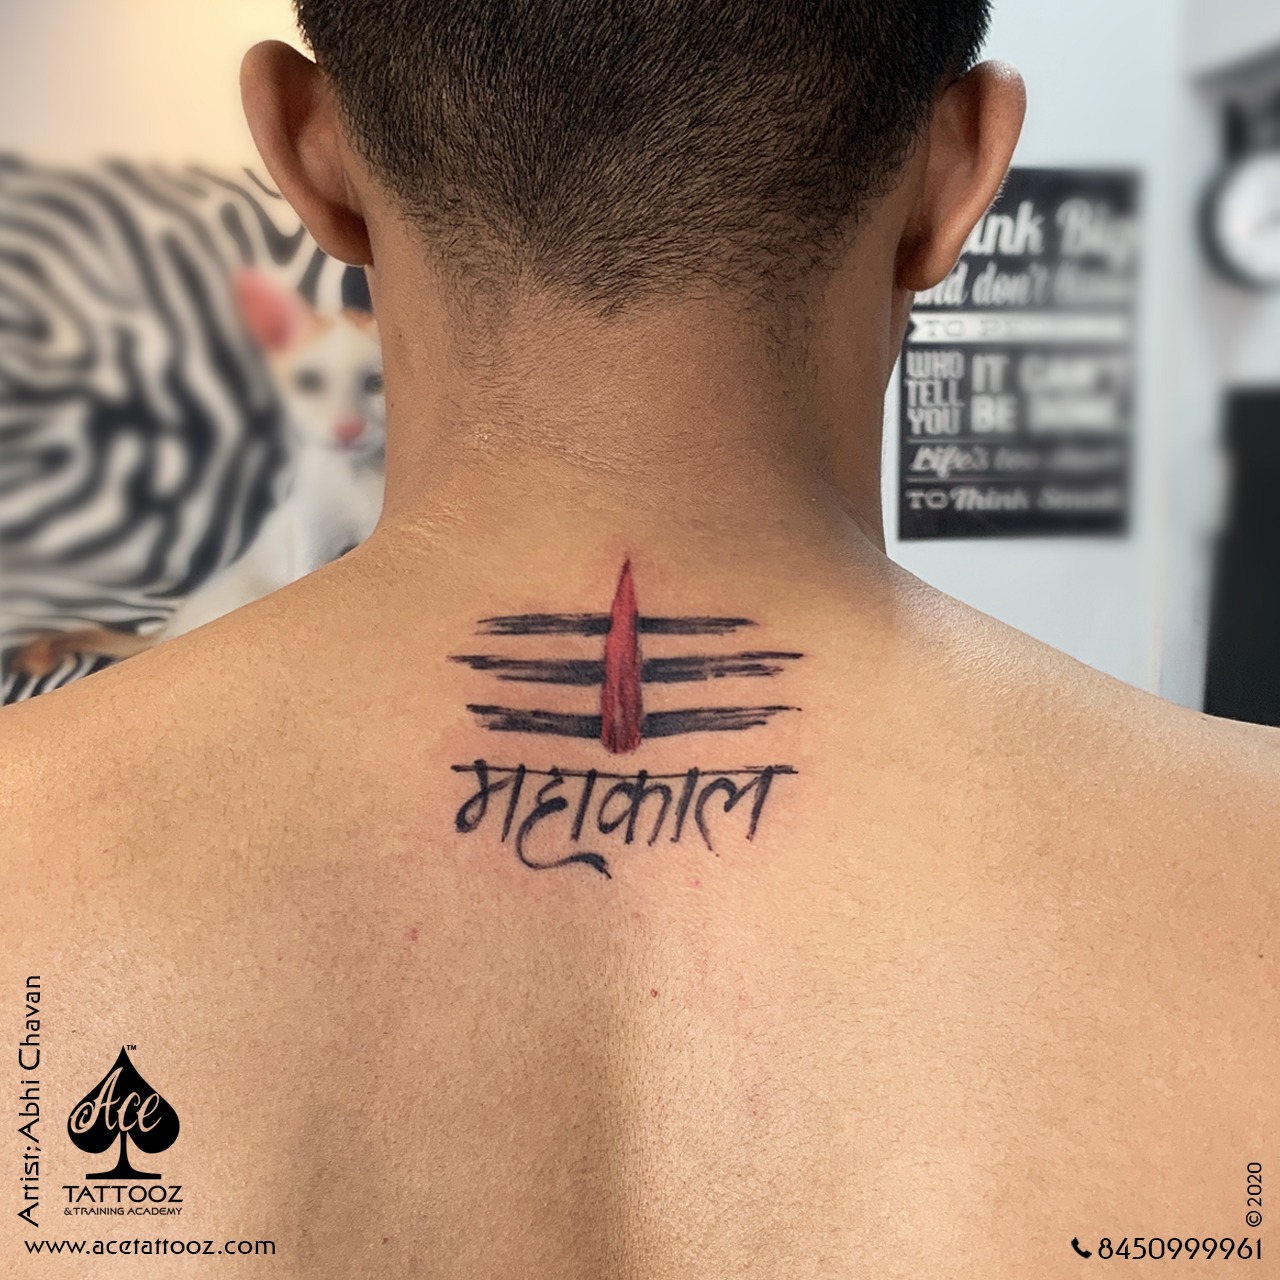 Tattoo uploaded by Vipul Chaudhary • nikhil name tattoo |Nikhil tattoo | Nikhil name tattoo ideas • Tattoodo